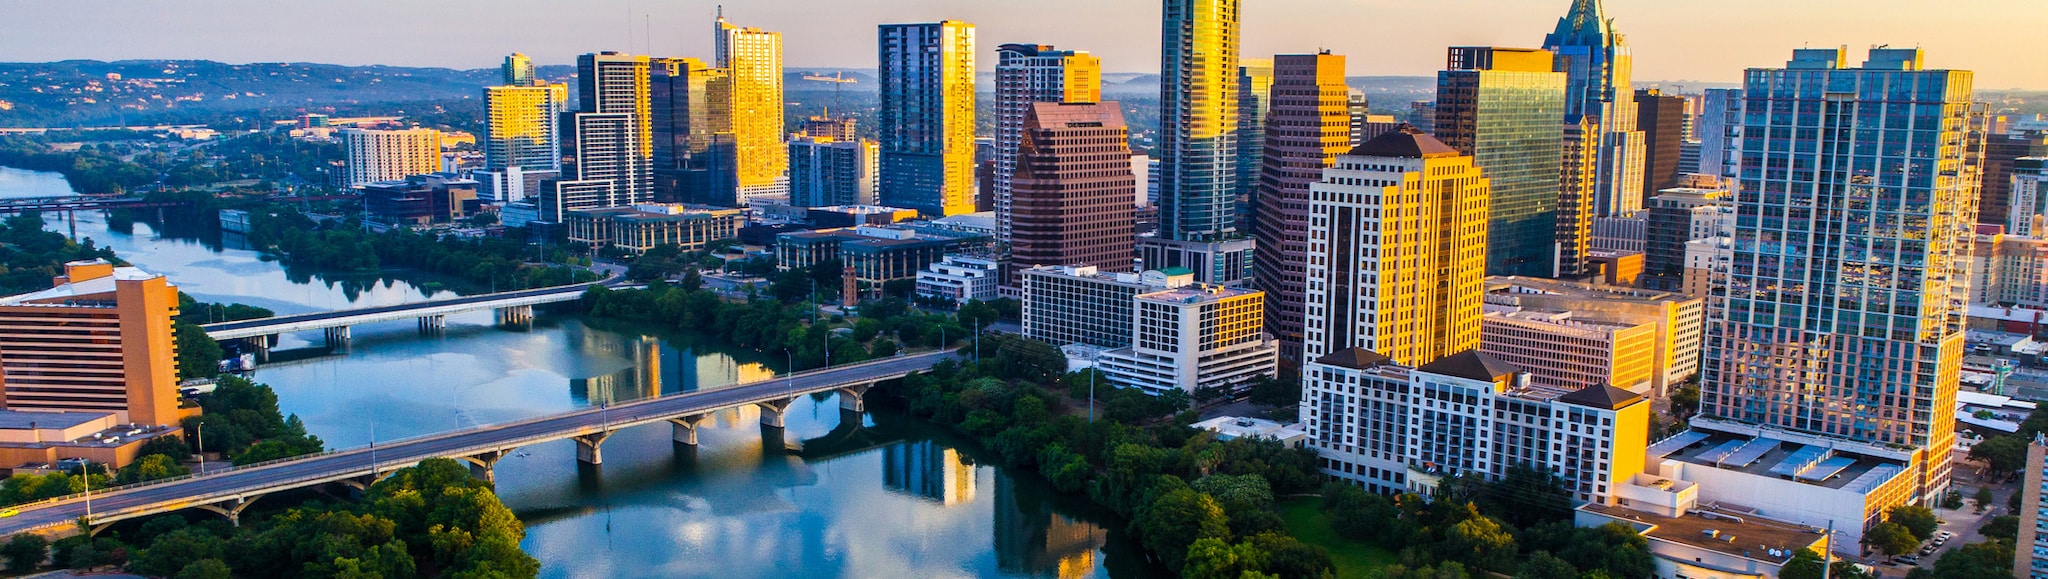 Cityscape of Austin, TX at sunset